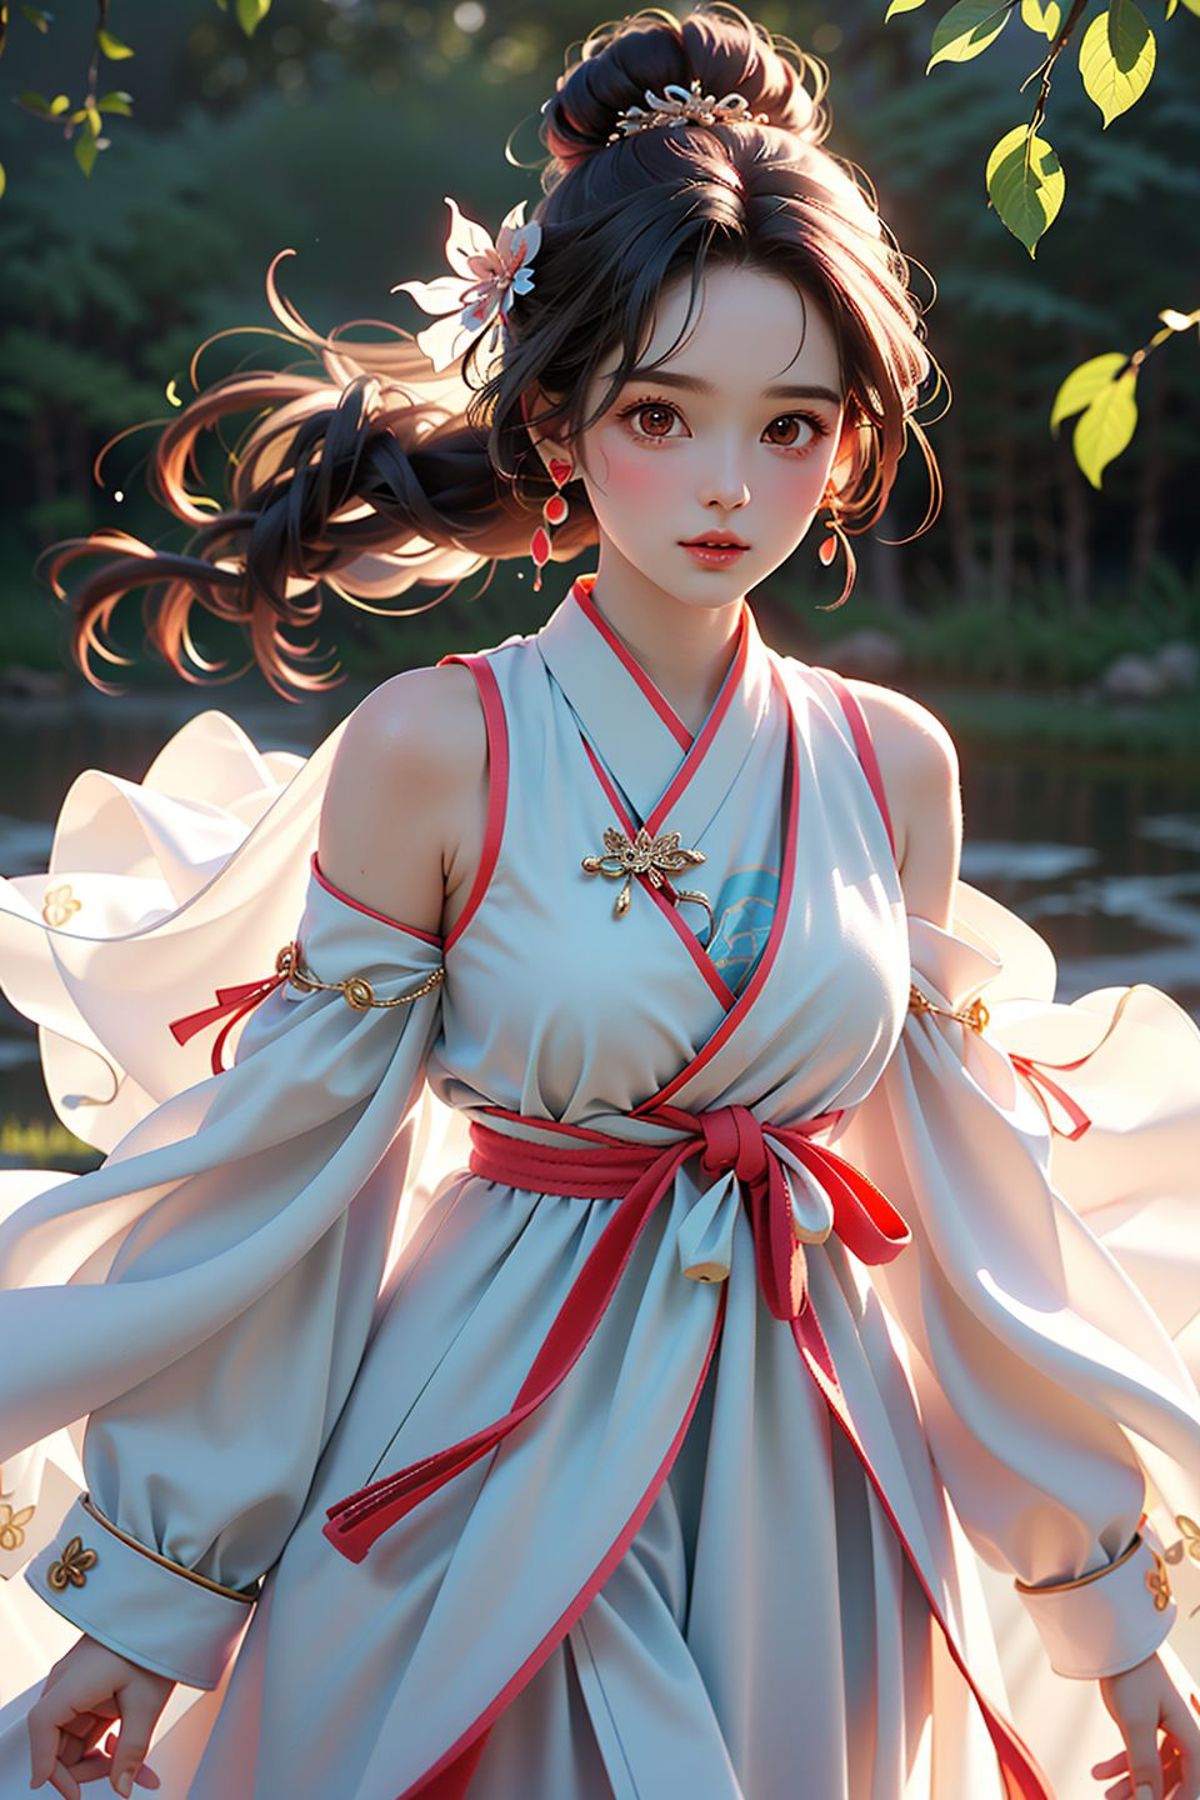 国风萌玩 | Chinese style cute doll image by ylnnn